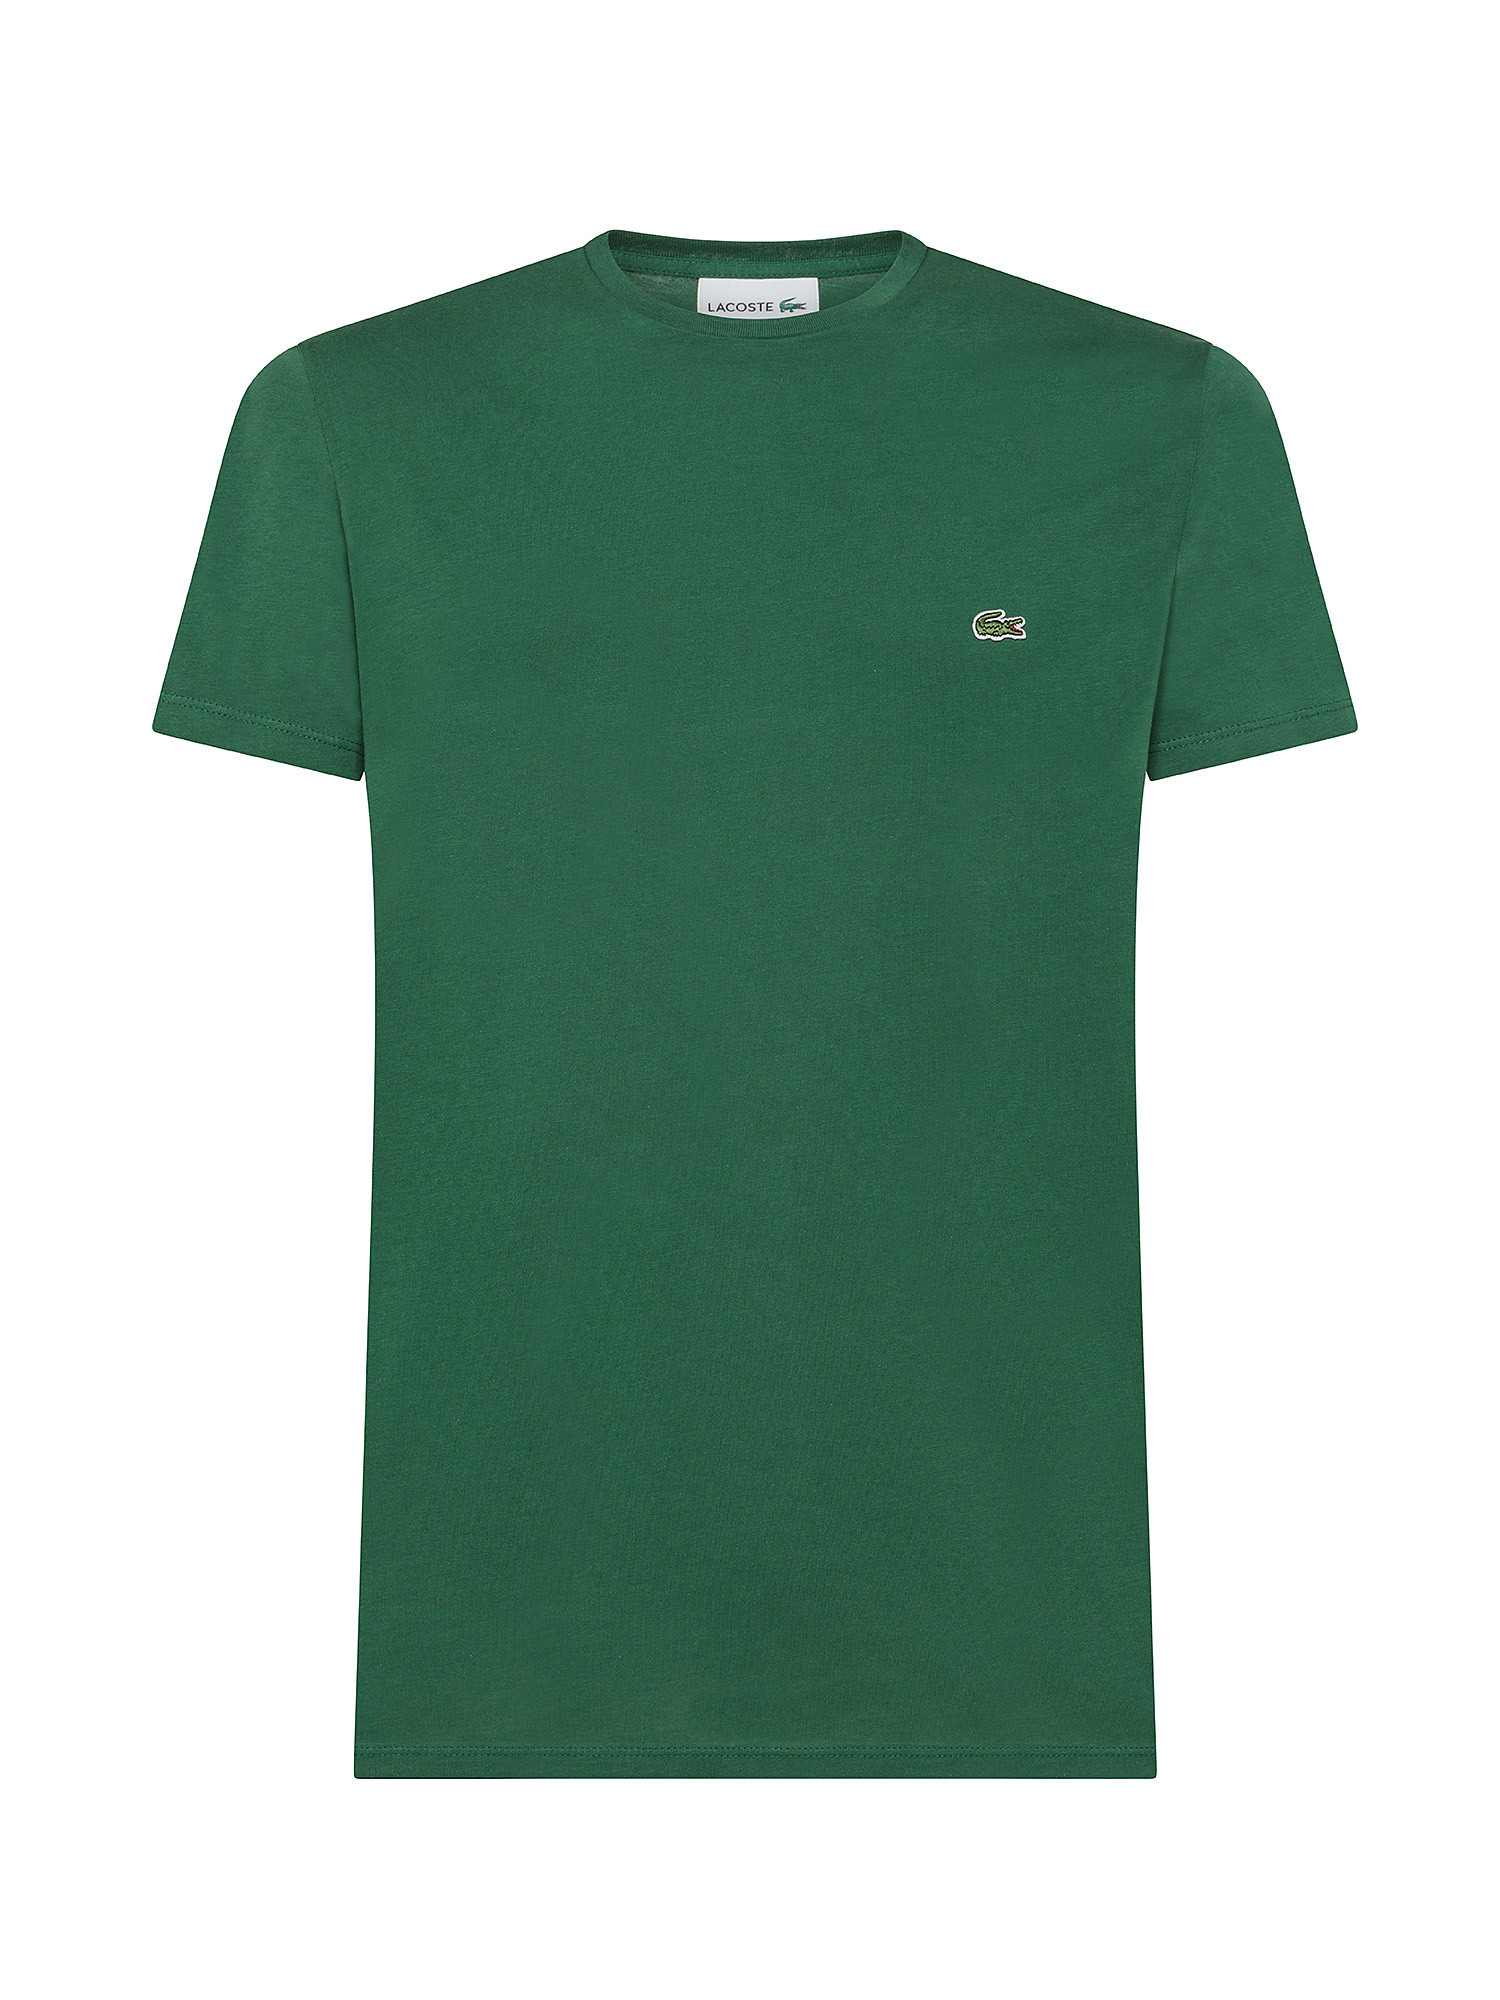 Lacoste - Pima cotton jersey crewneck T-shirt, Green, large image number 0